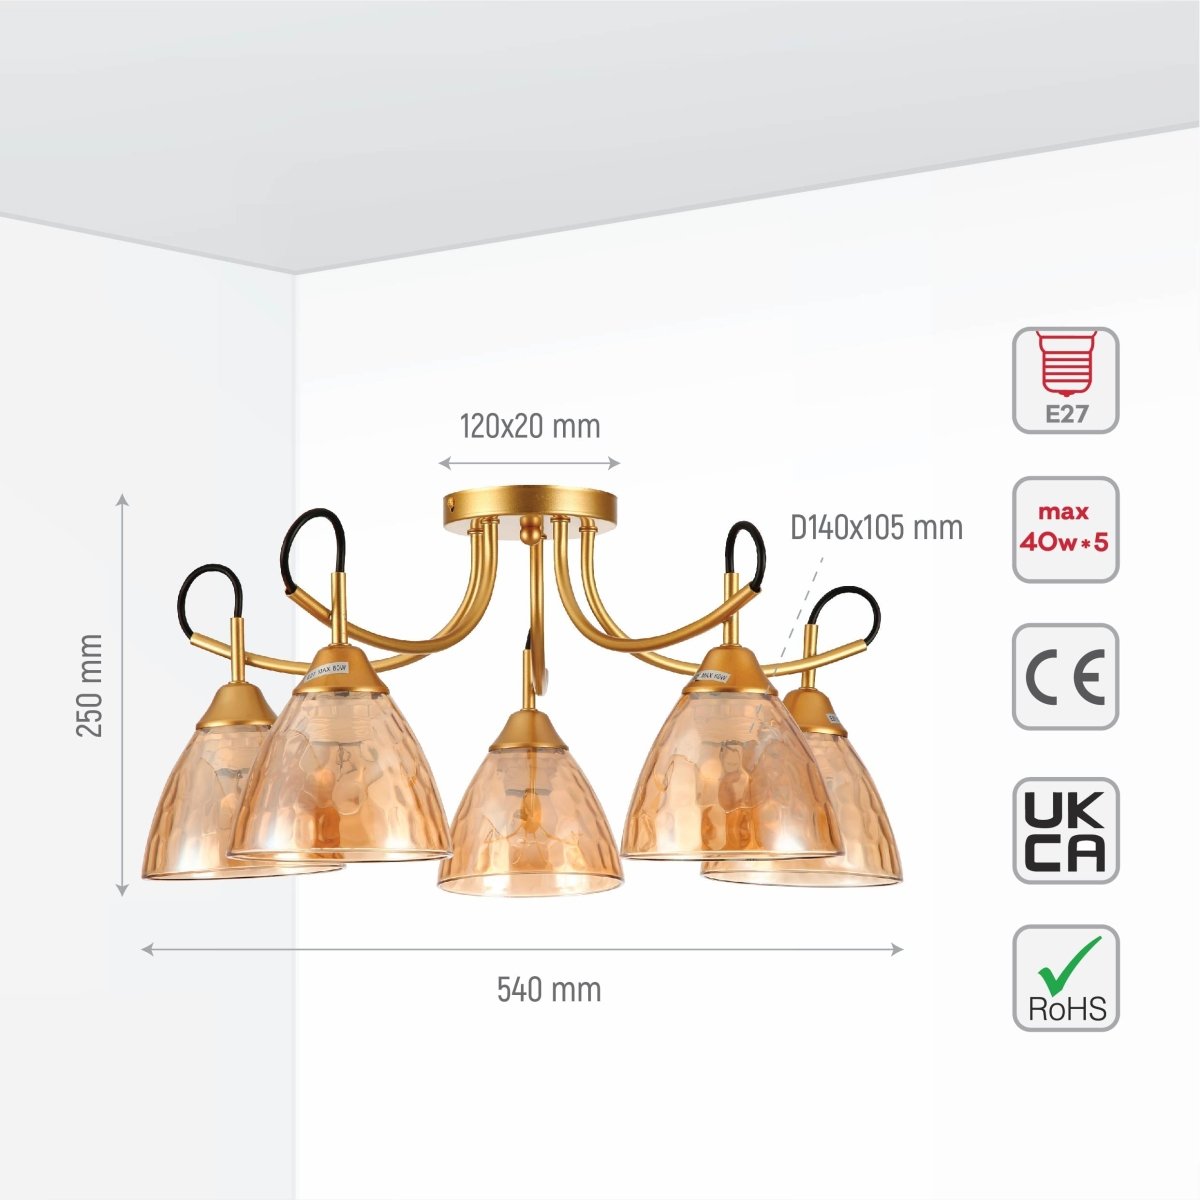 Size and specs of Amber Cone Glass Gold Semi Flush Ceiling Light E27 | TEKLED 159-17642